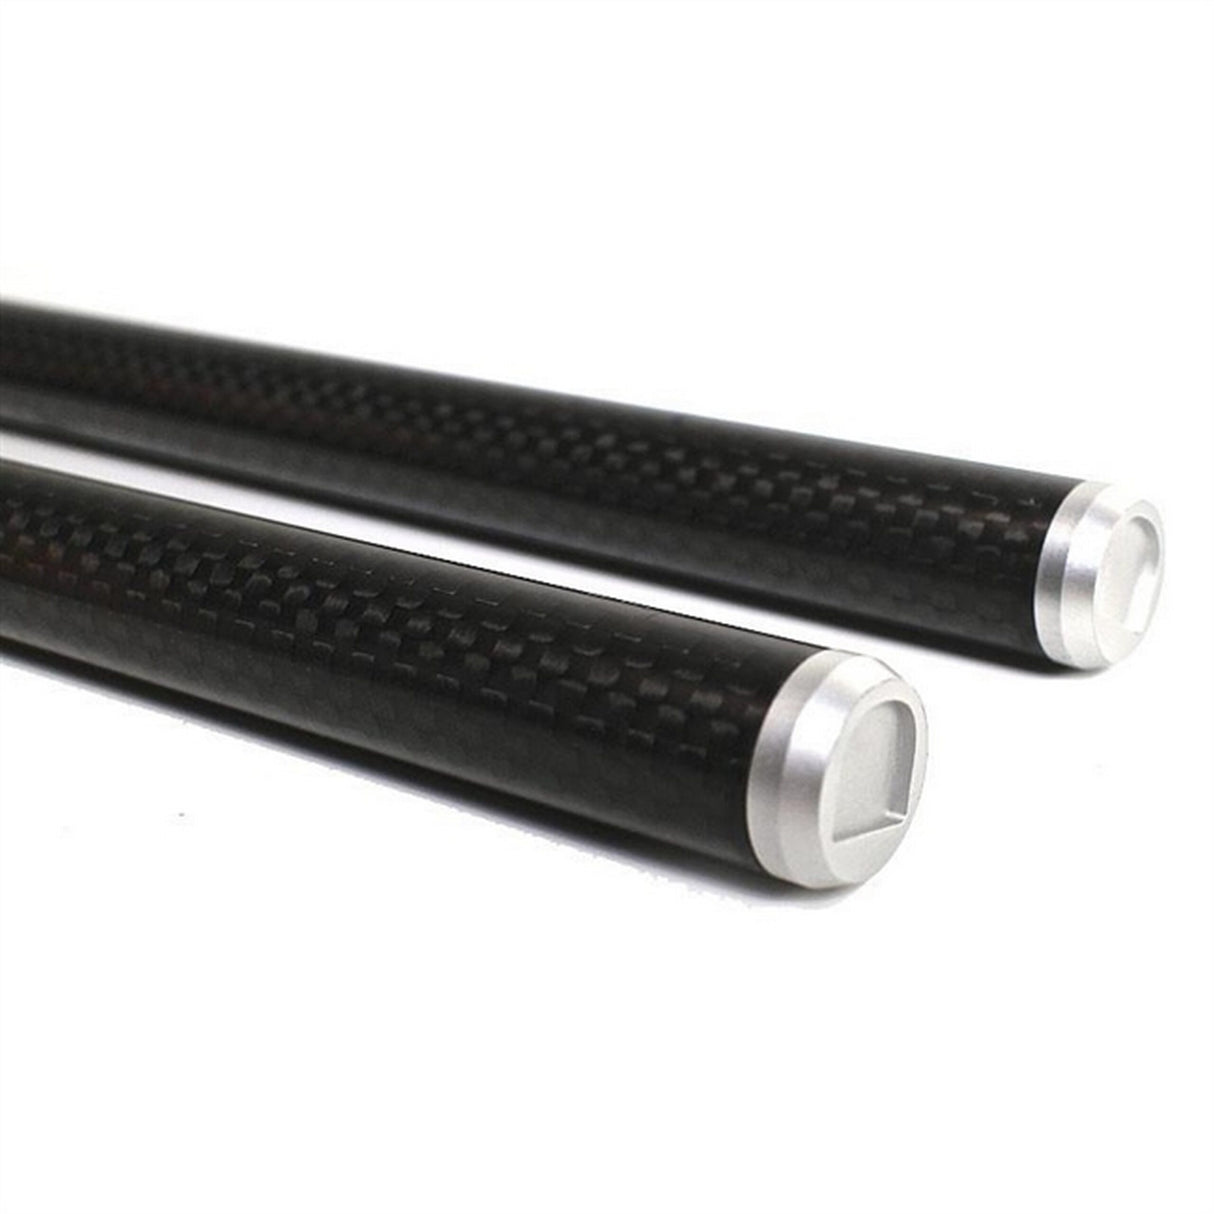 Genustech G-DCFR250 Deluxe Carbon Fiber Rods, 250mm, Pair